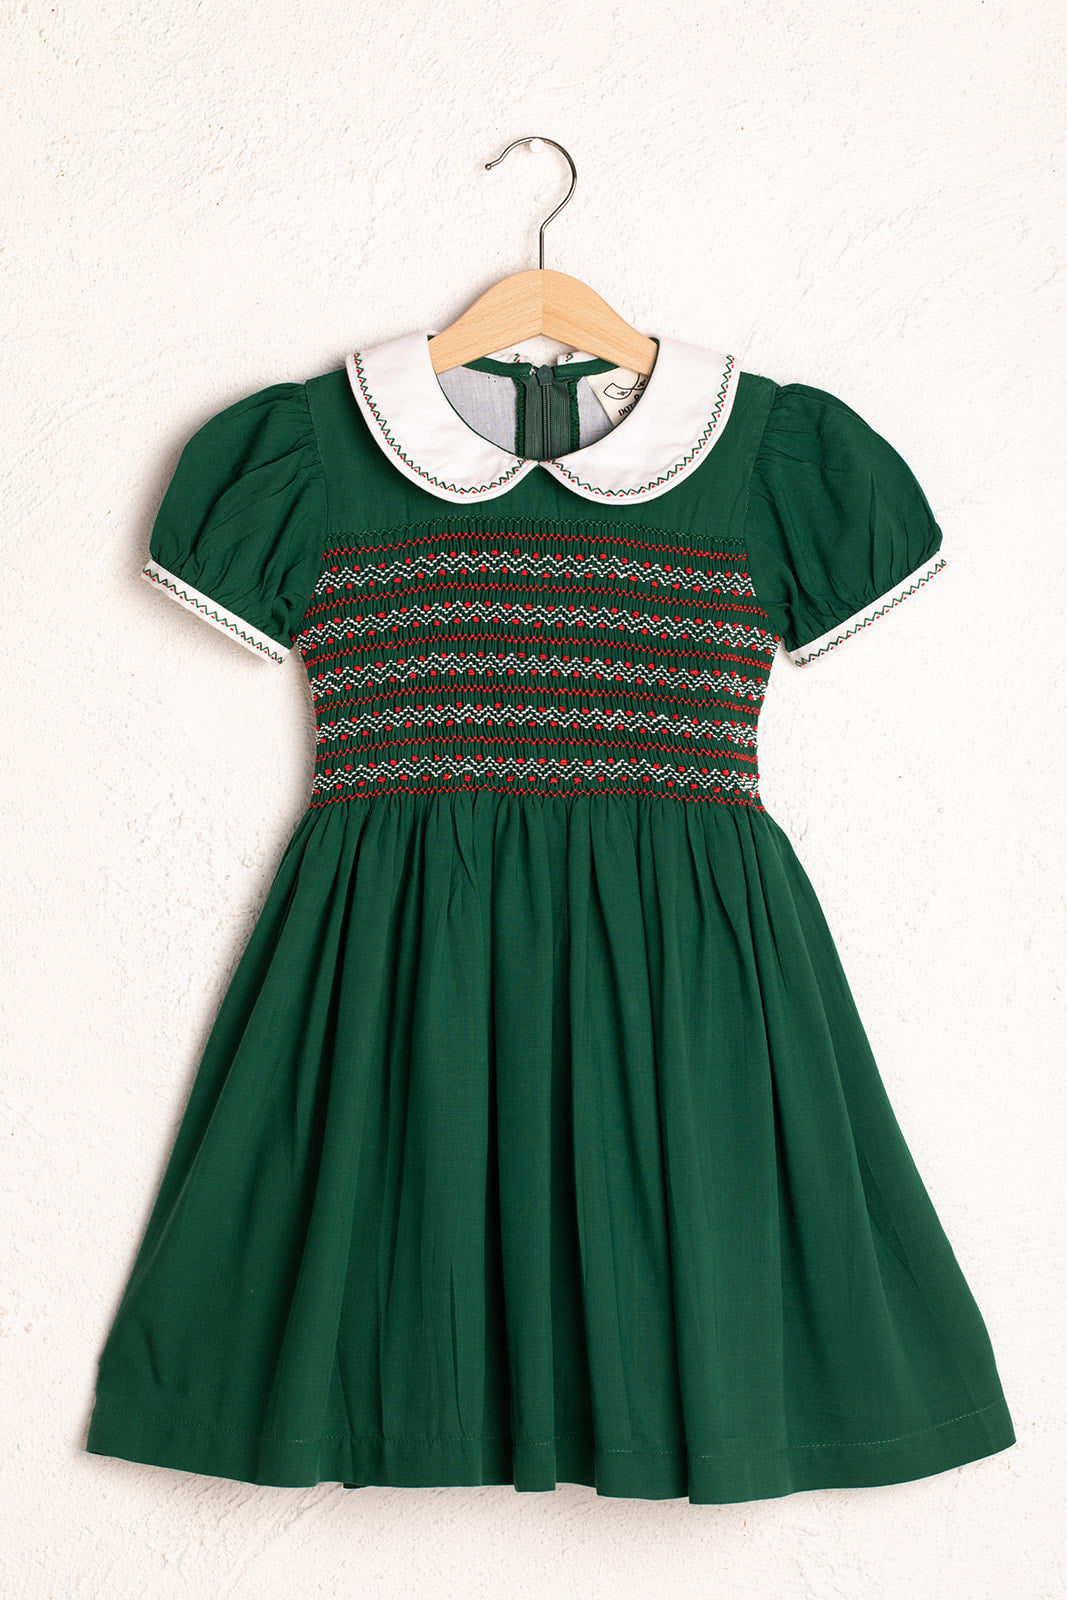 Dot & Mila Green Smocked Dress Size 3